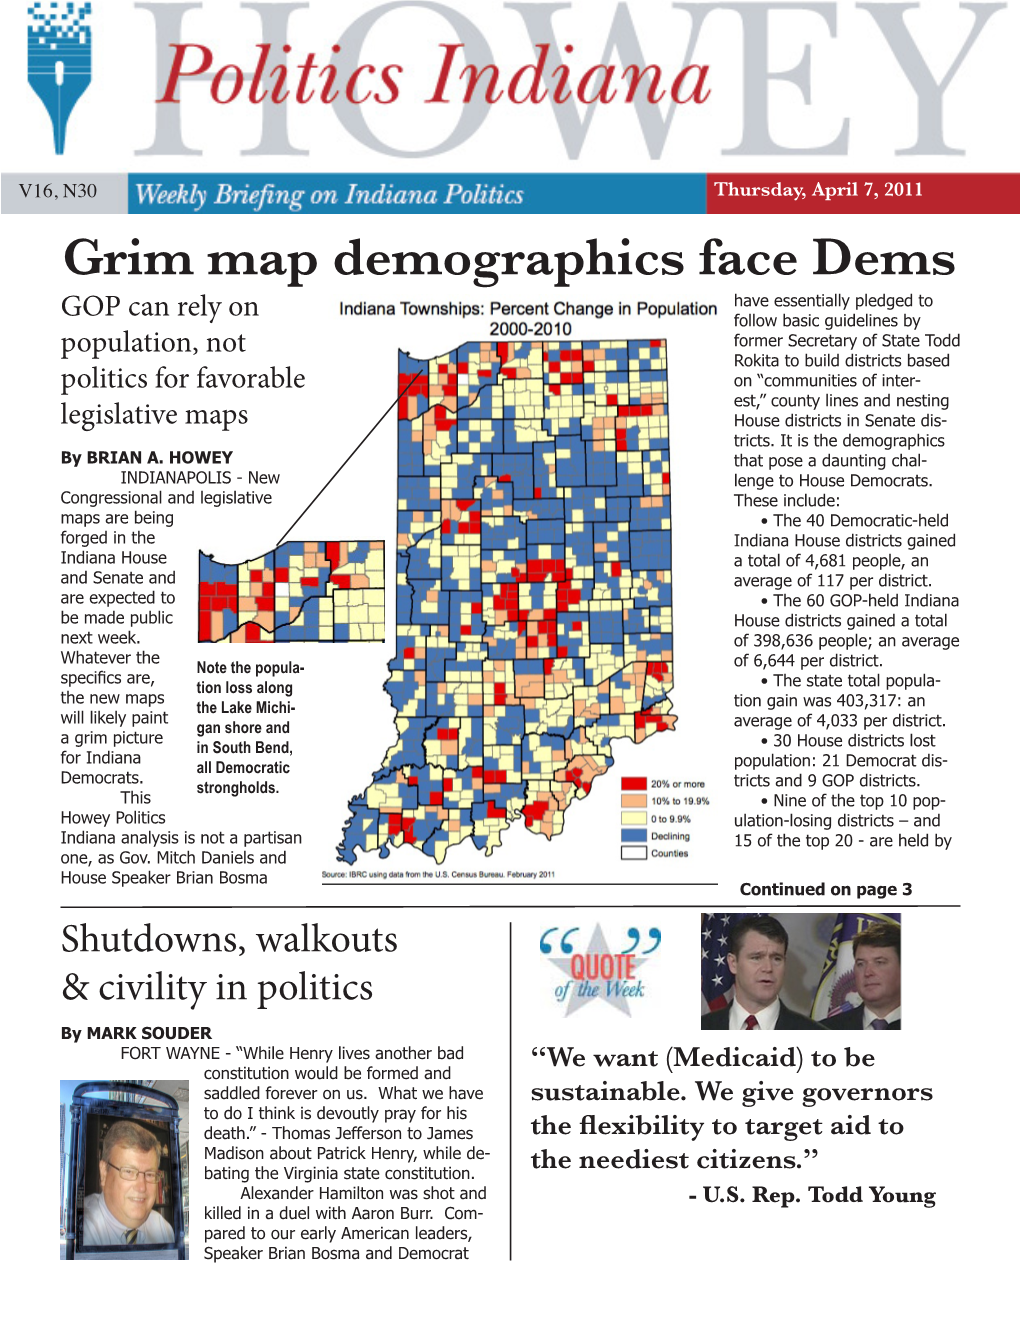 Grim Map Demographics Face Dems